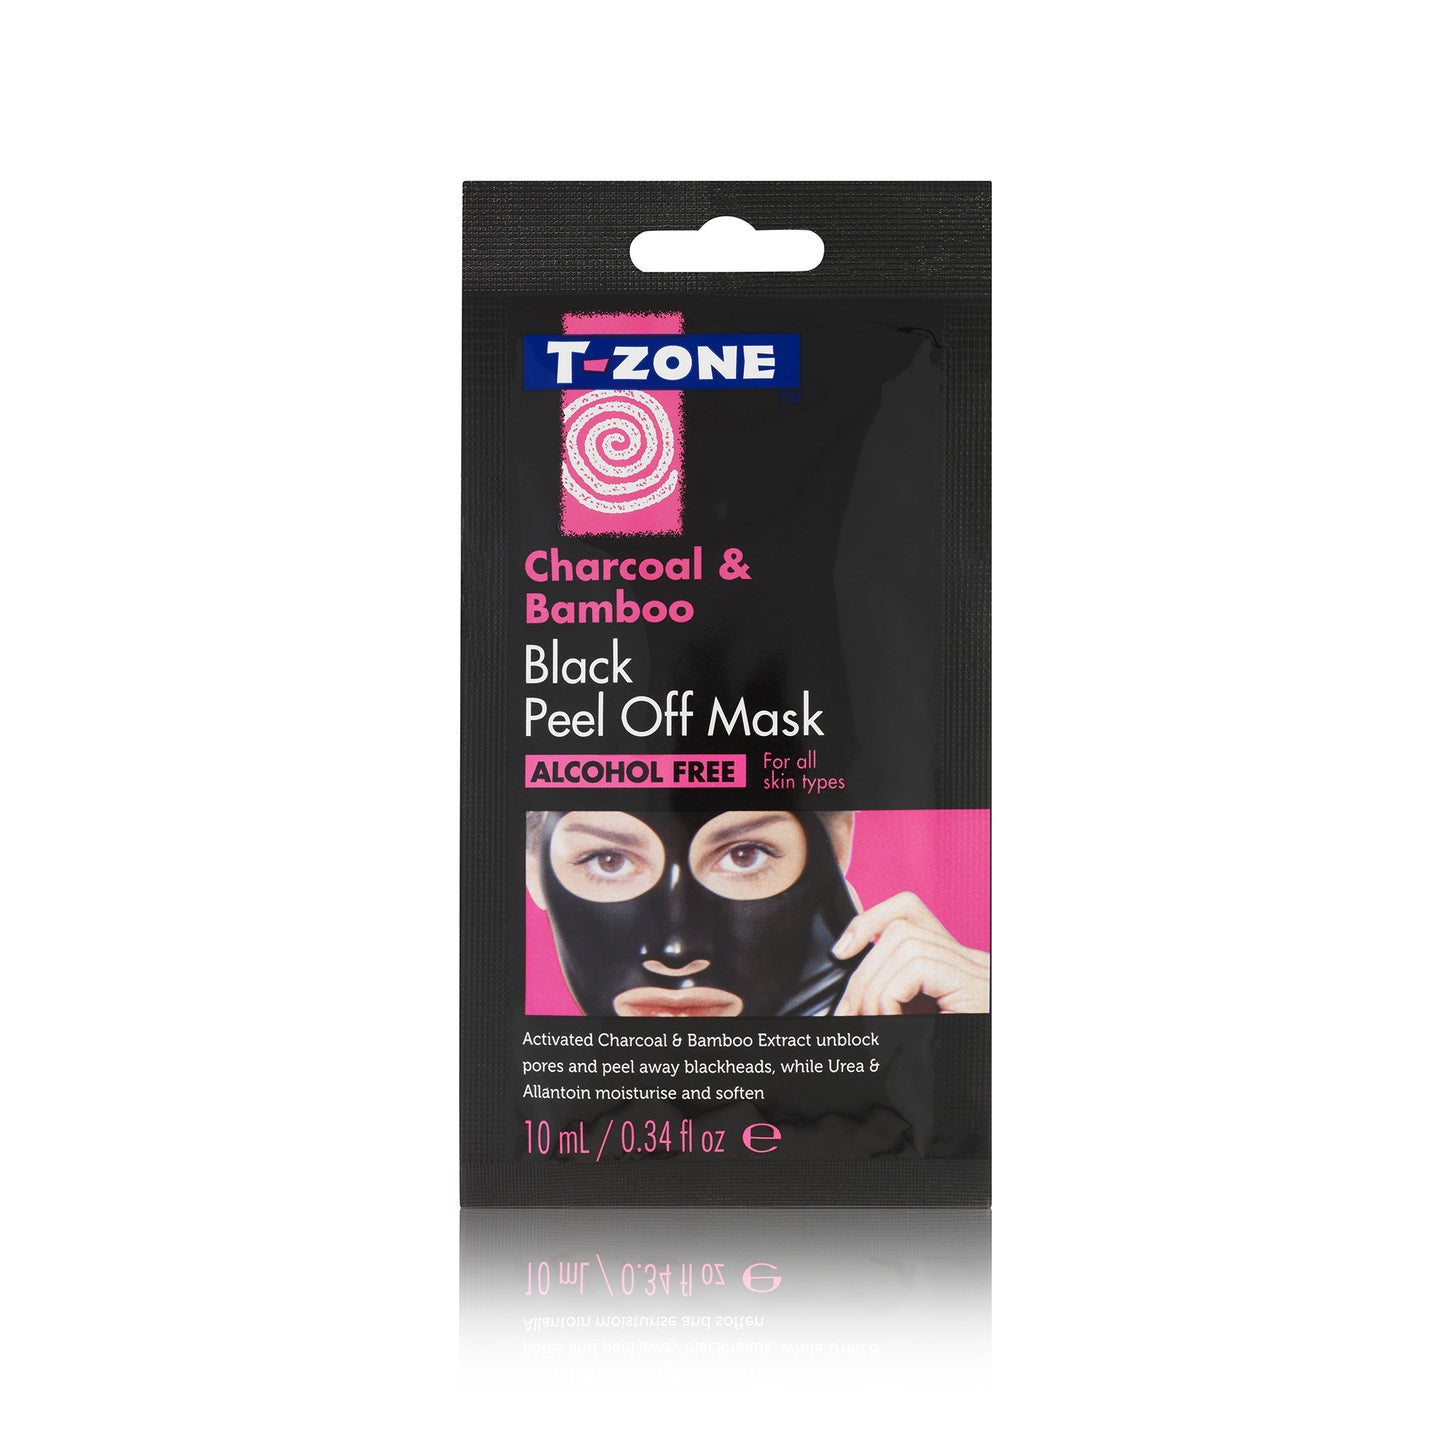 T-Zone Charcoal & Bamboo Black Peel Off Mask 10ml